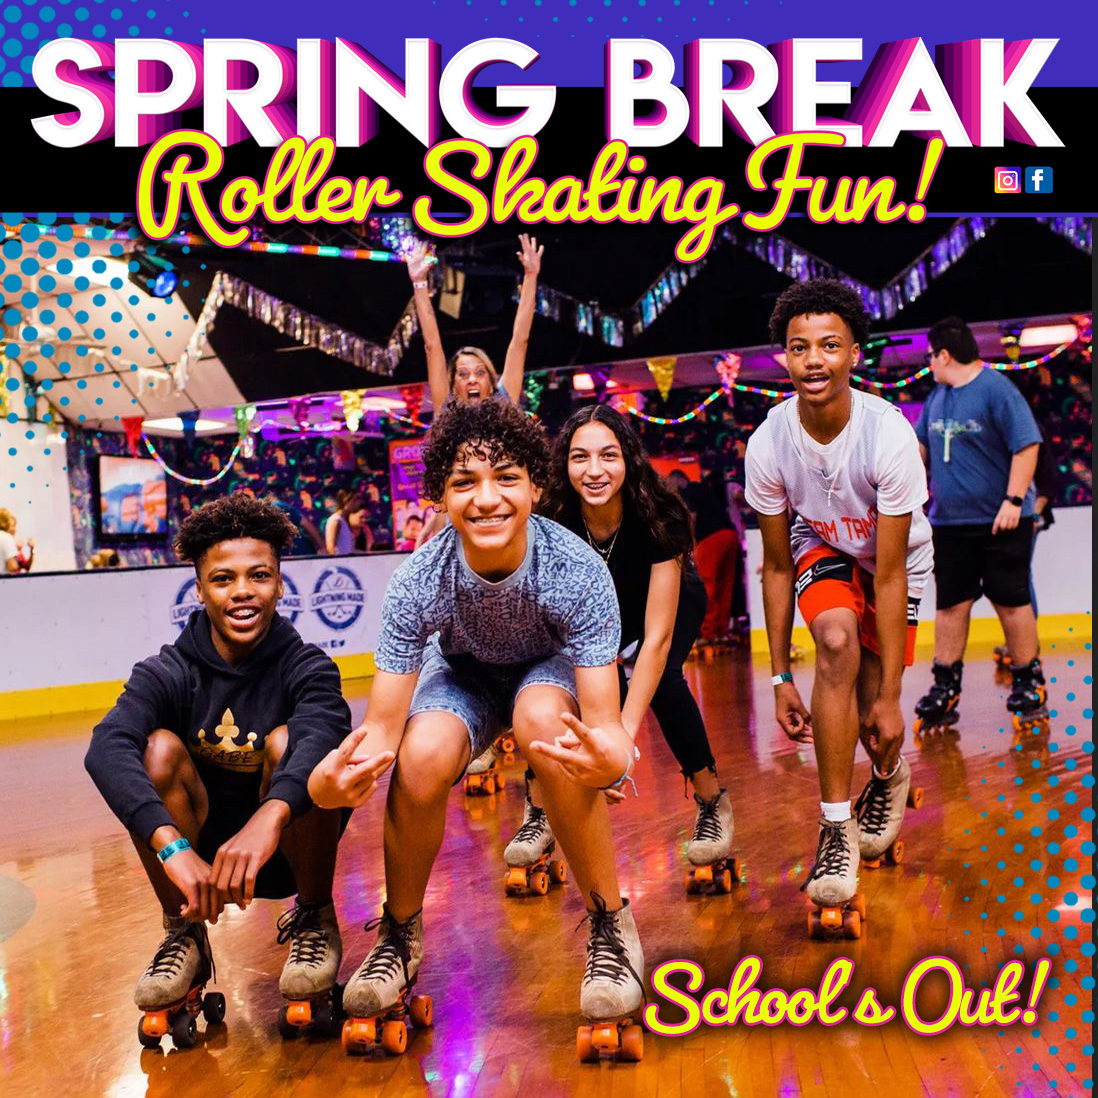 Spring Break Skating @ United Skates